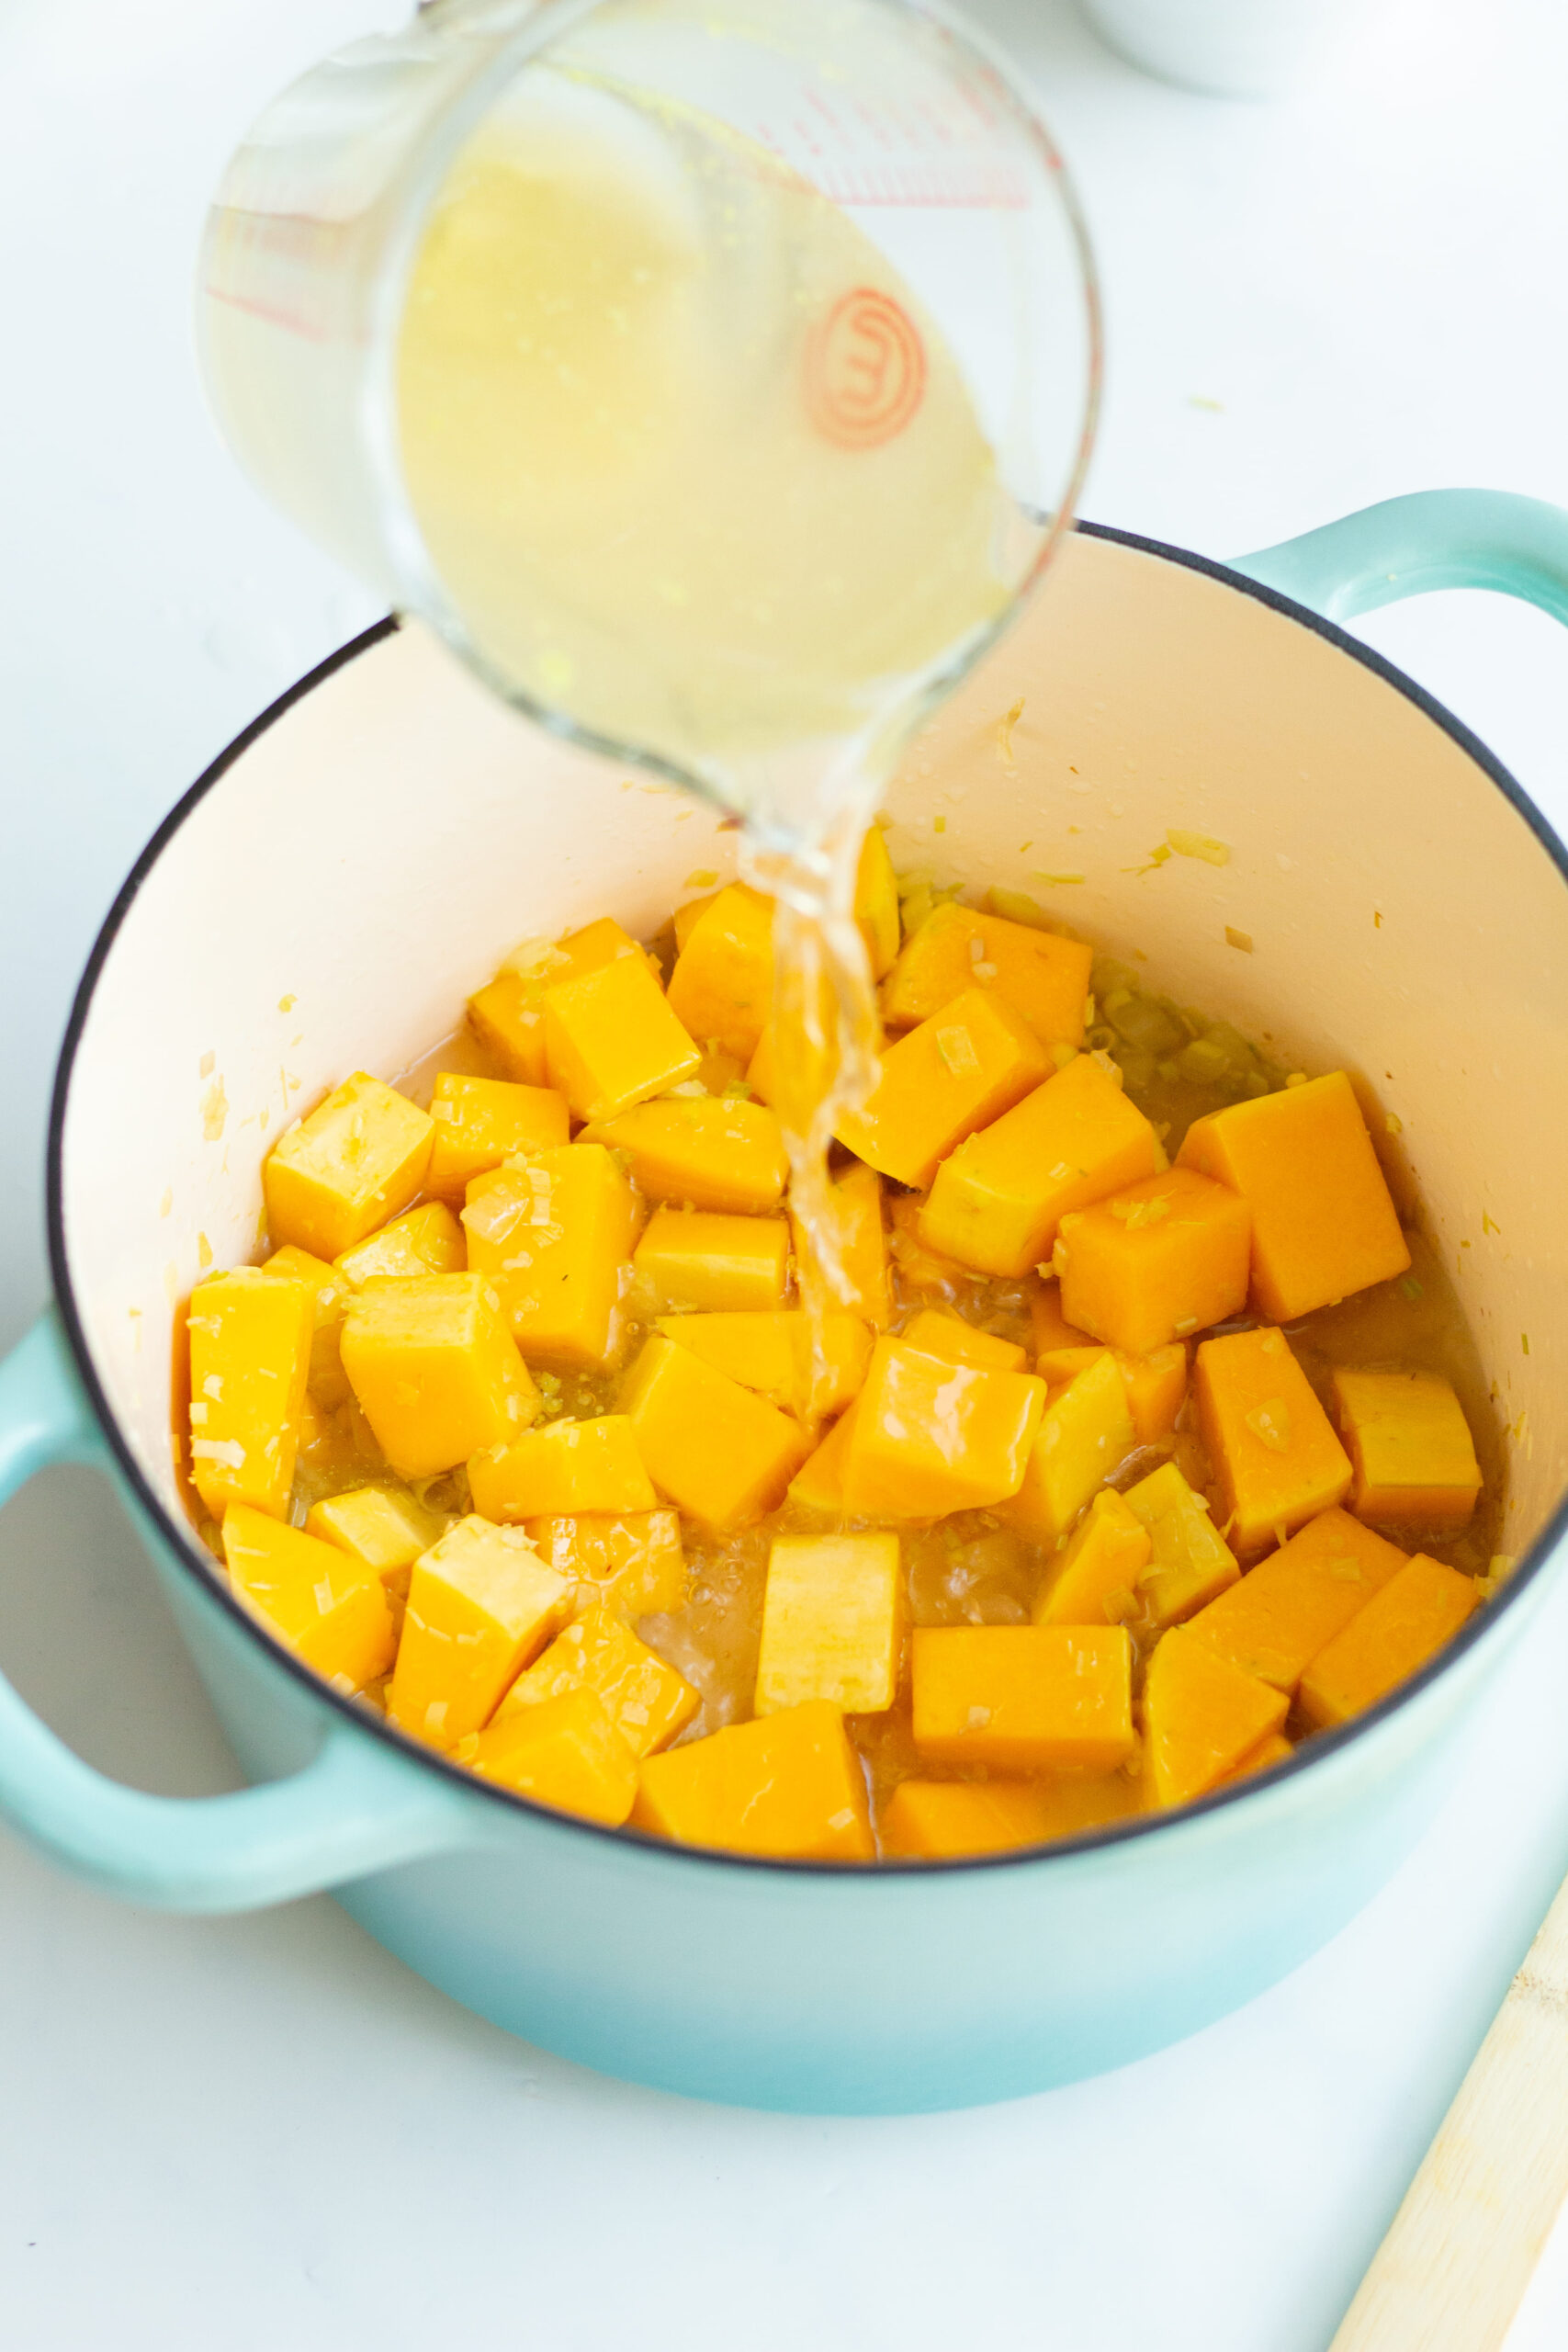 Healthy & Hearty Butternut Squash Soup Recipe